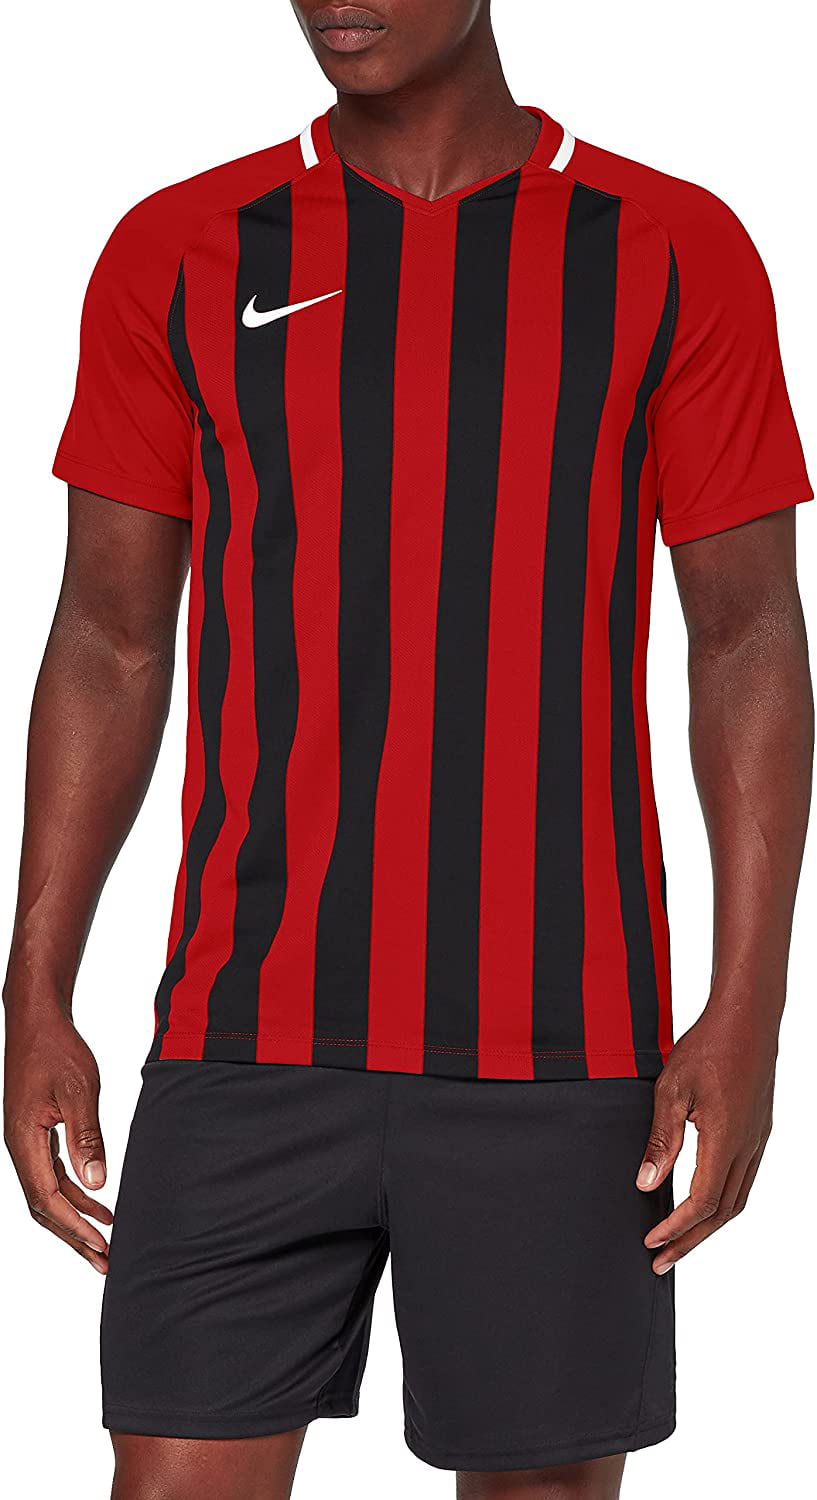 Nike Men's Jersey Division III Soccer Jersey (University Red/Black, Small) Walmart.com